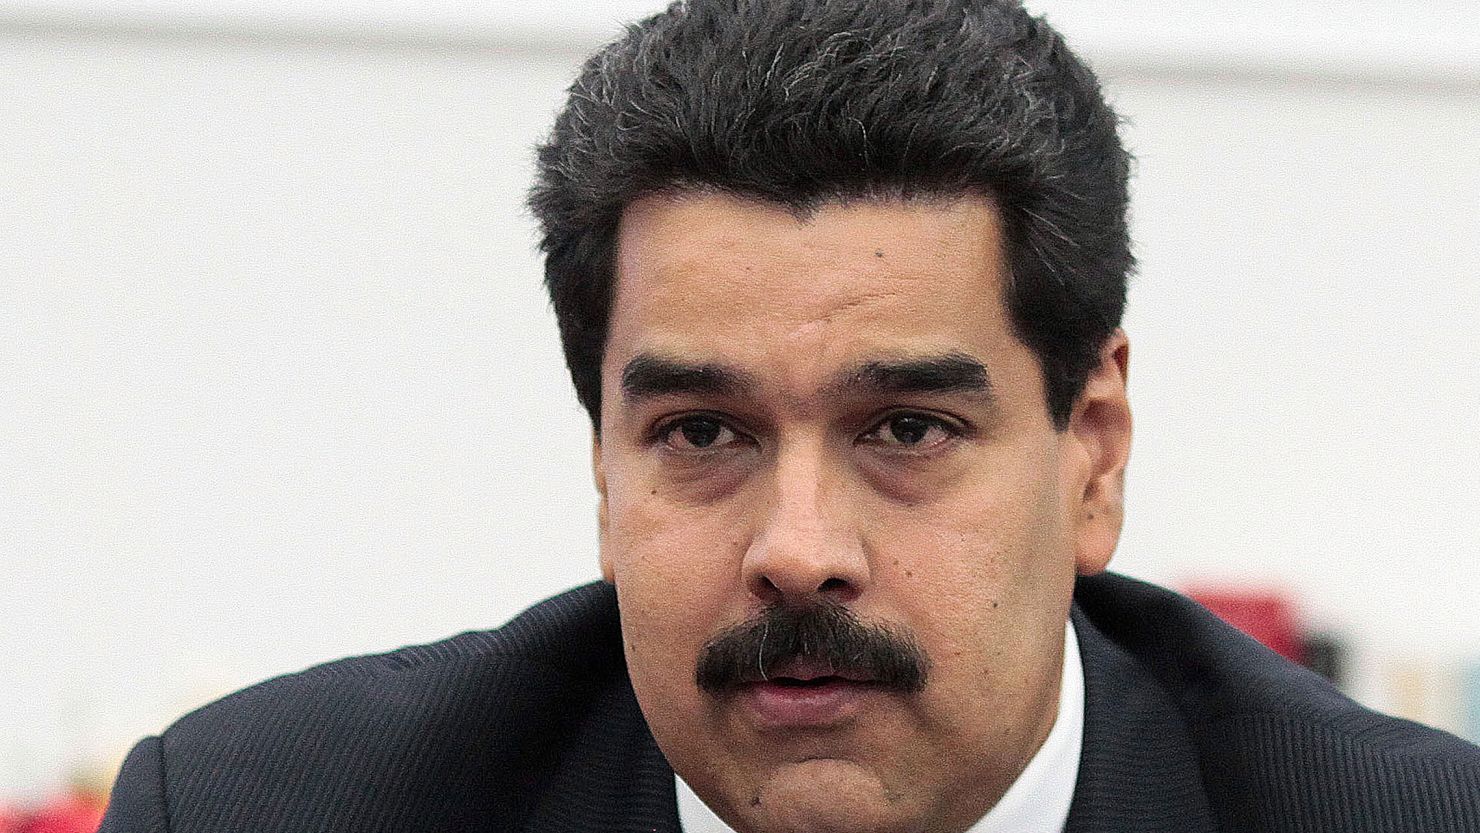 Venezuelan Vice President Nicolas Maduro told supporters Wednesday his opponents were plotting to murder him.